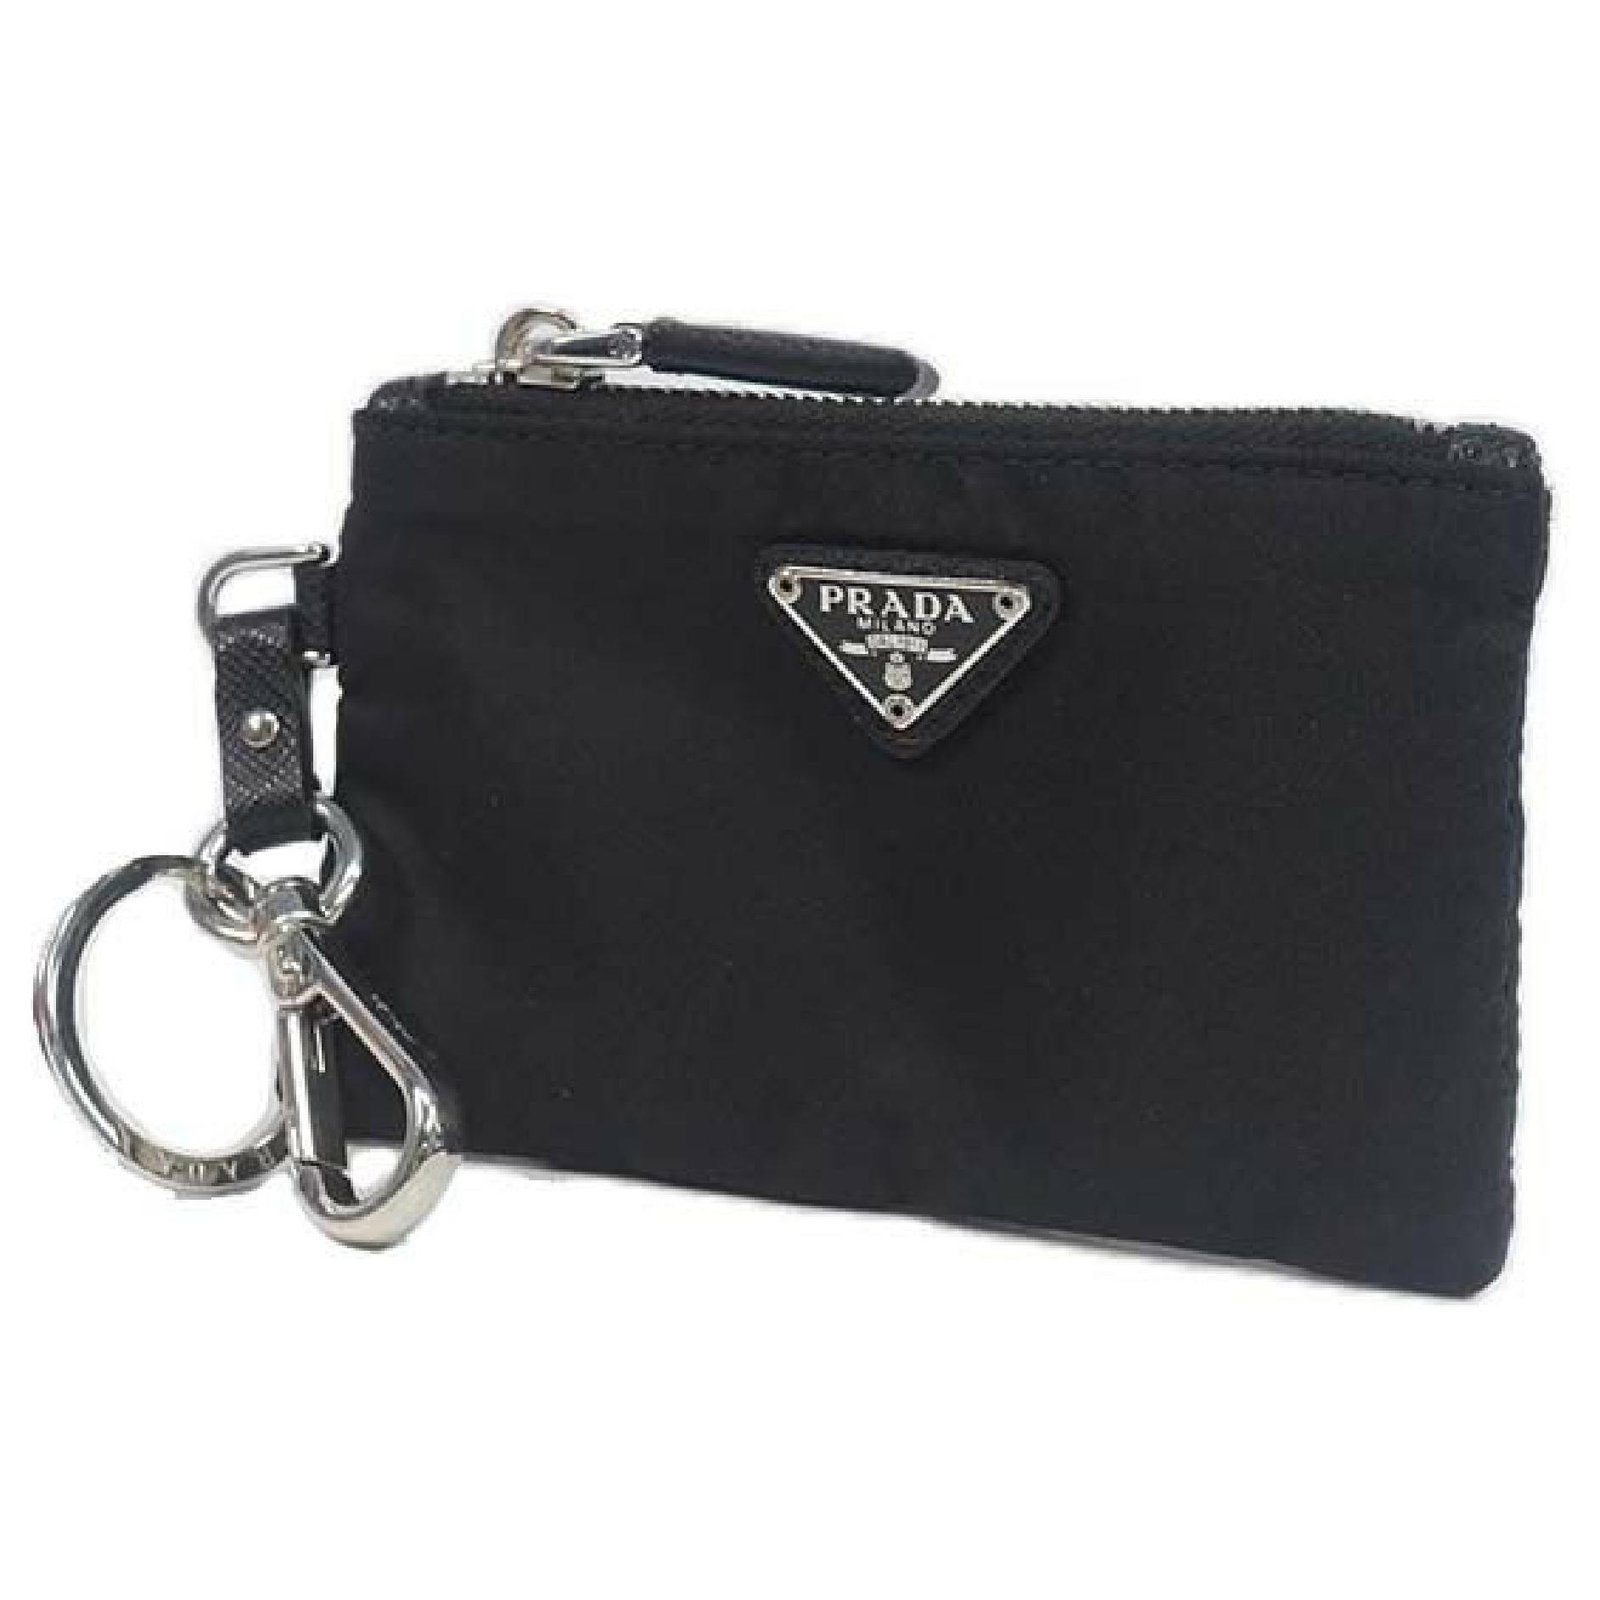 Prada coin purse keychain - Black